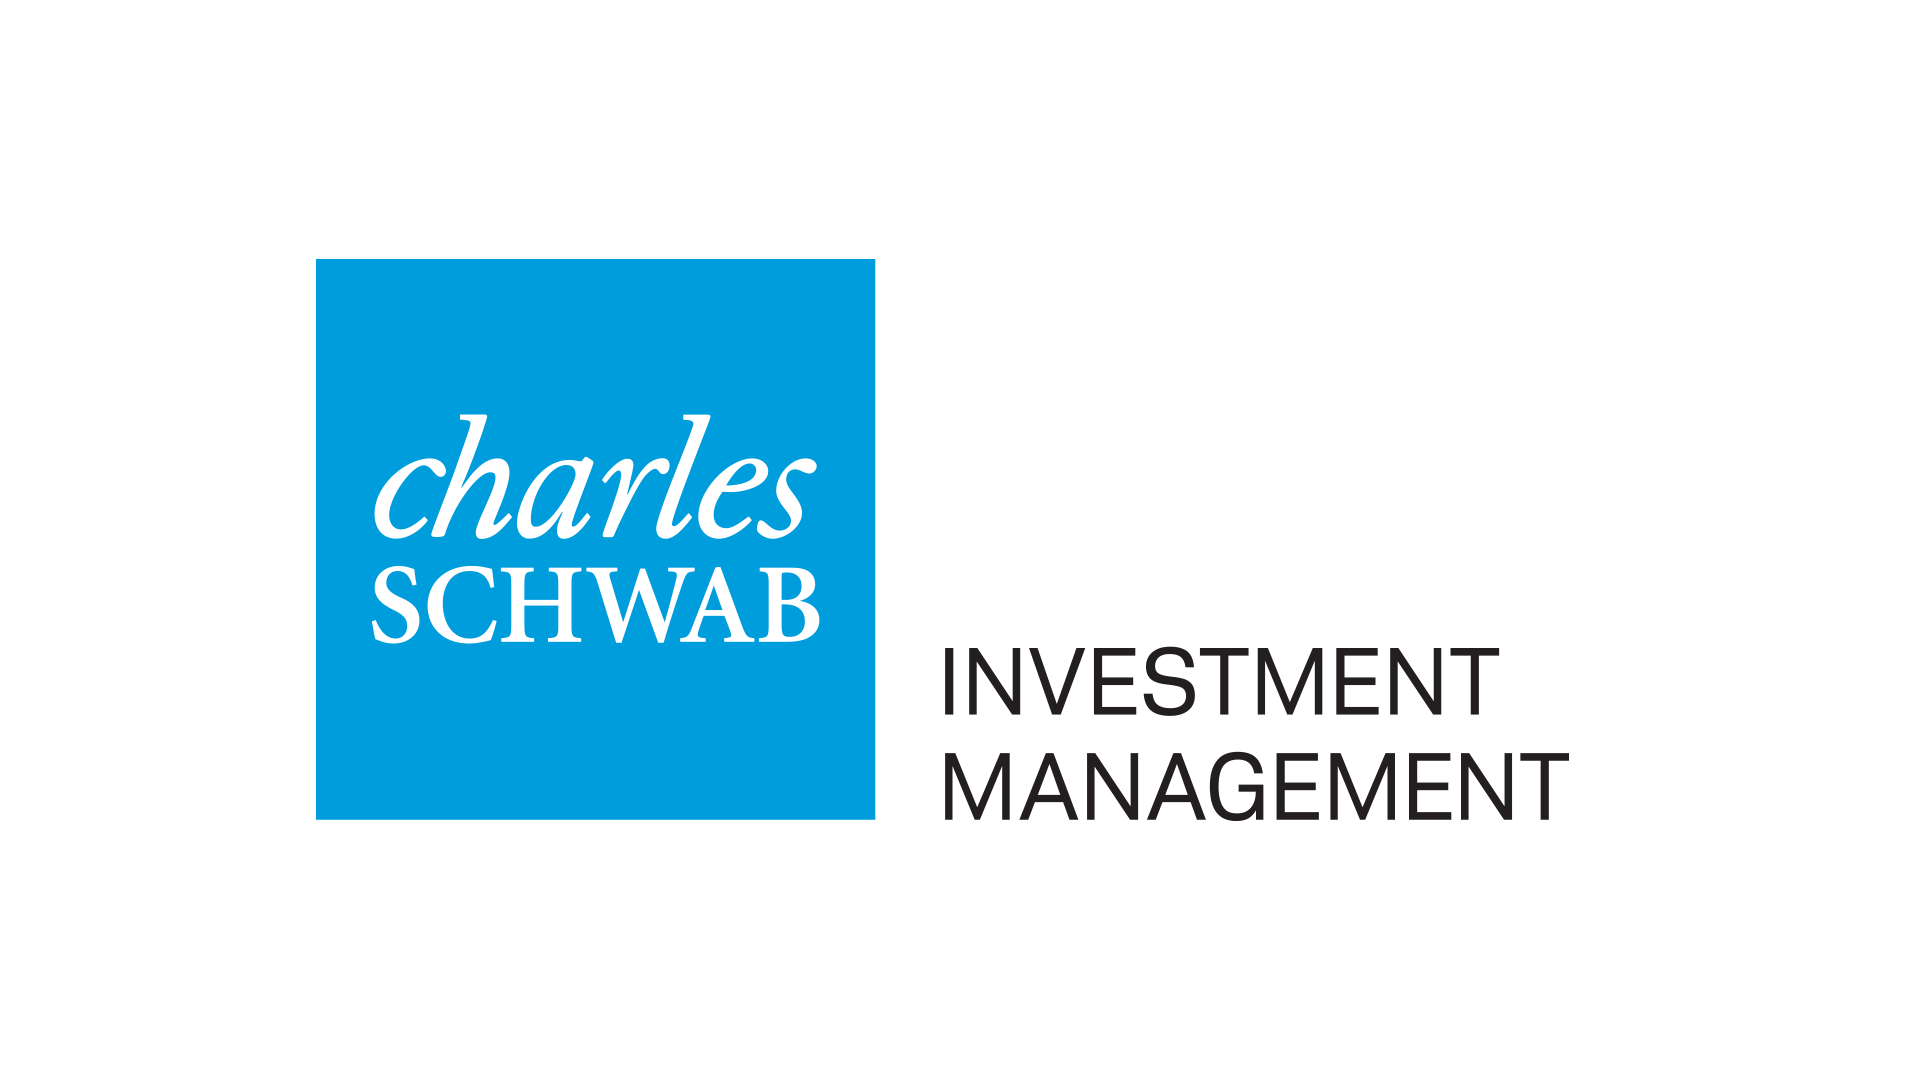 charles schwab logo png 20 free Cliparts | Download images ...